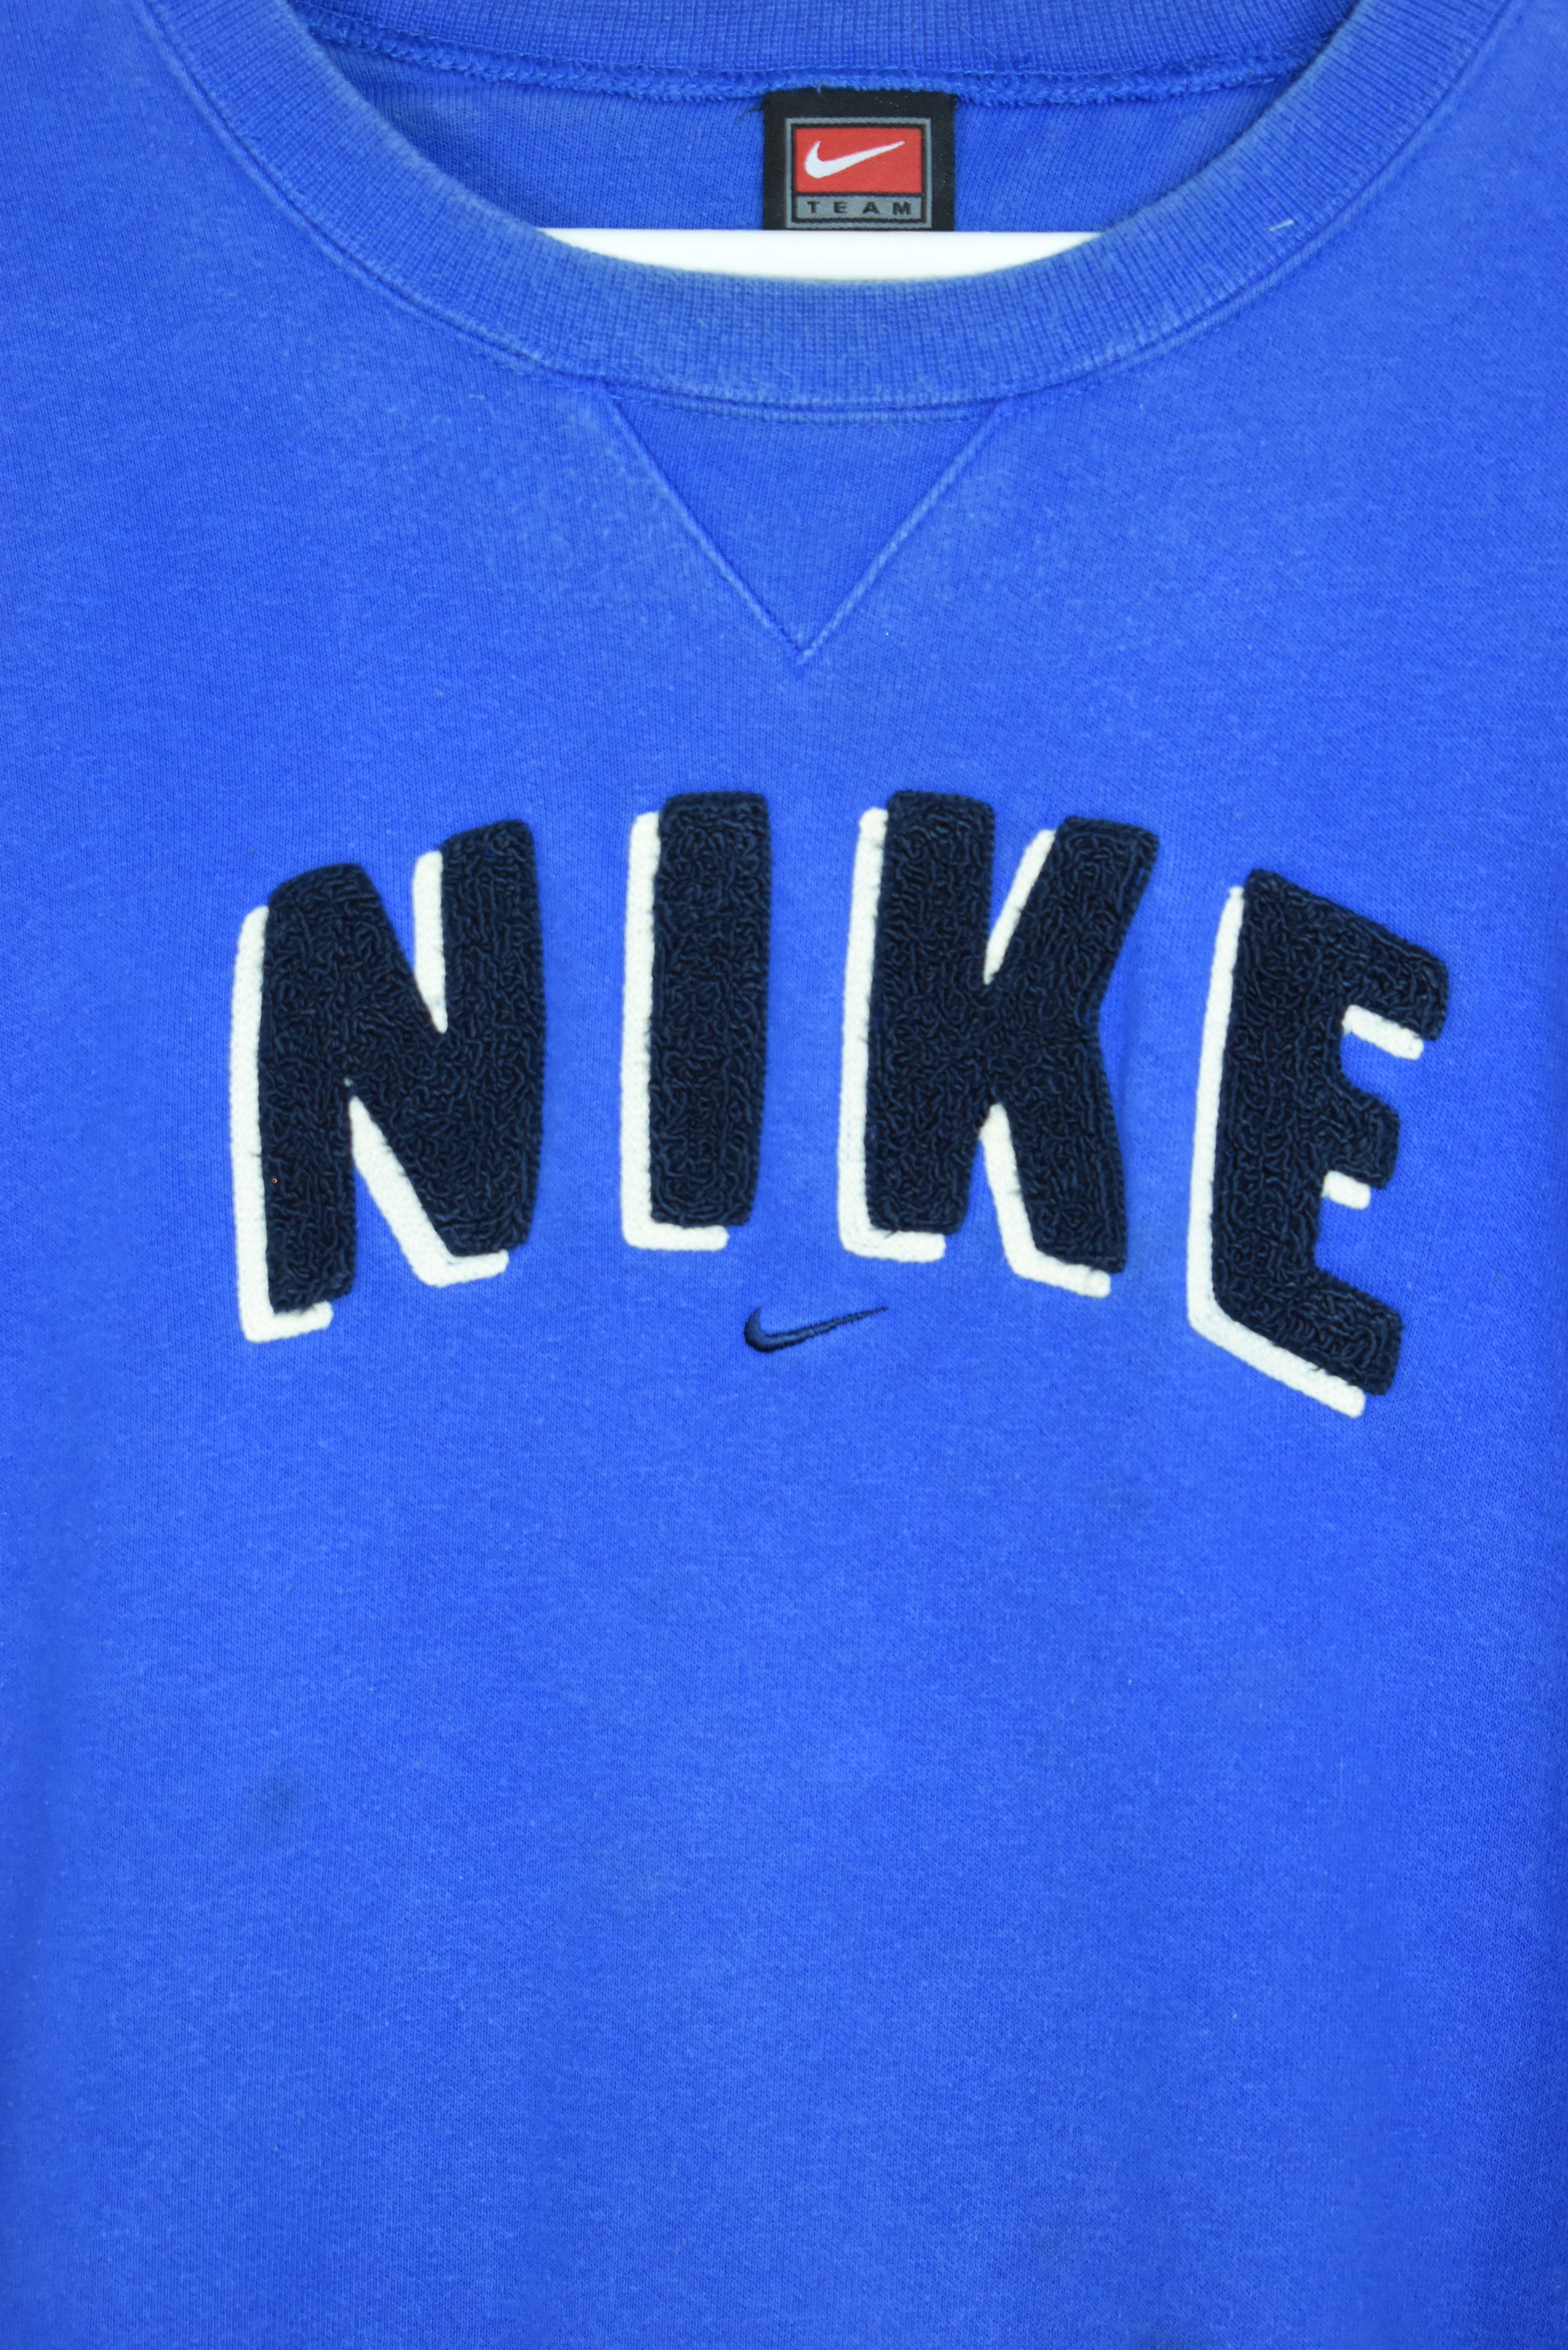 Vintage RARE Nike Puff Print Embridery Blue Sweatshirt XLARGE